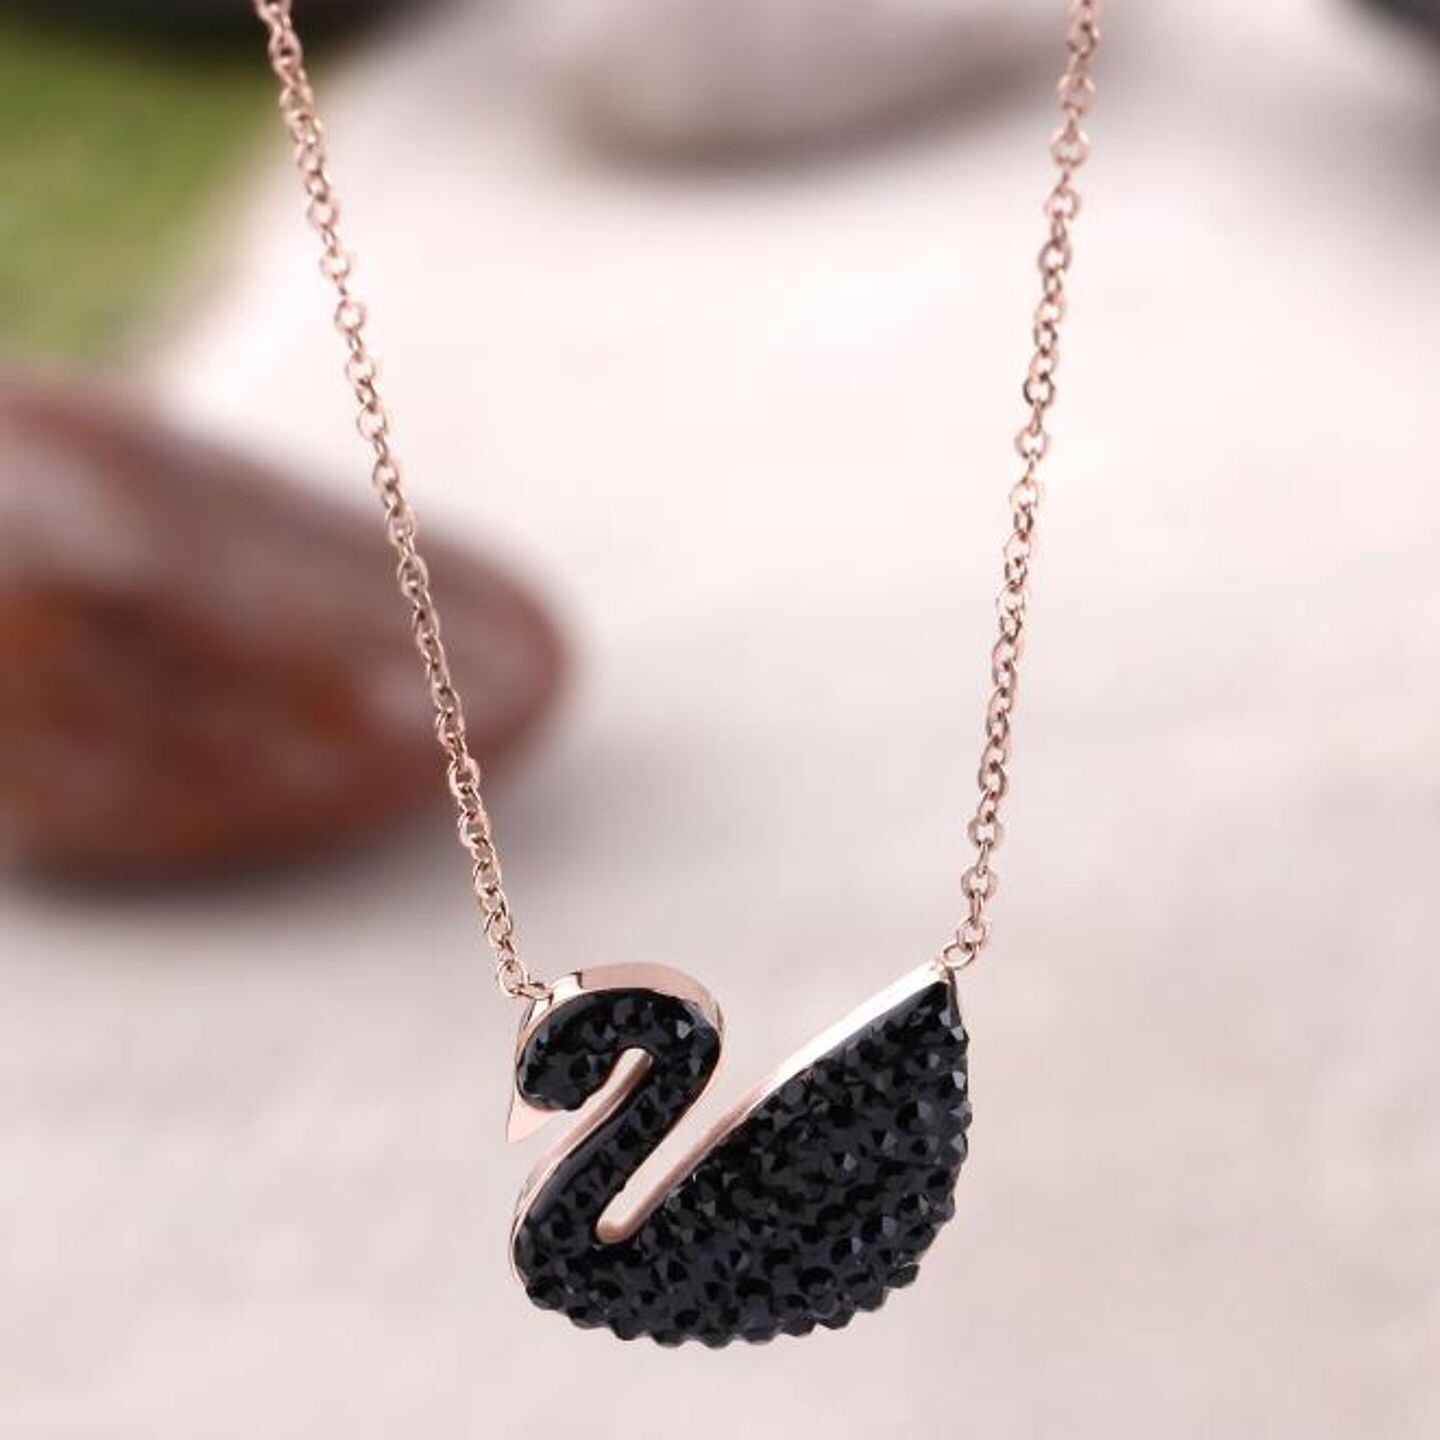 Dazzling Black Swan Necklace